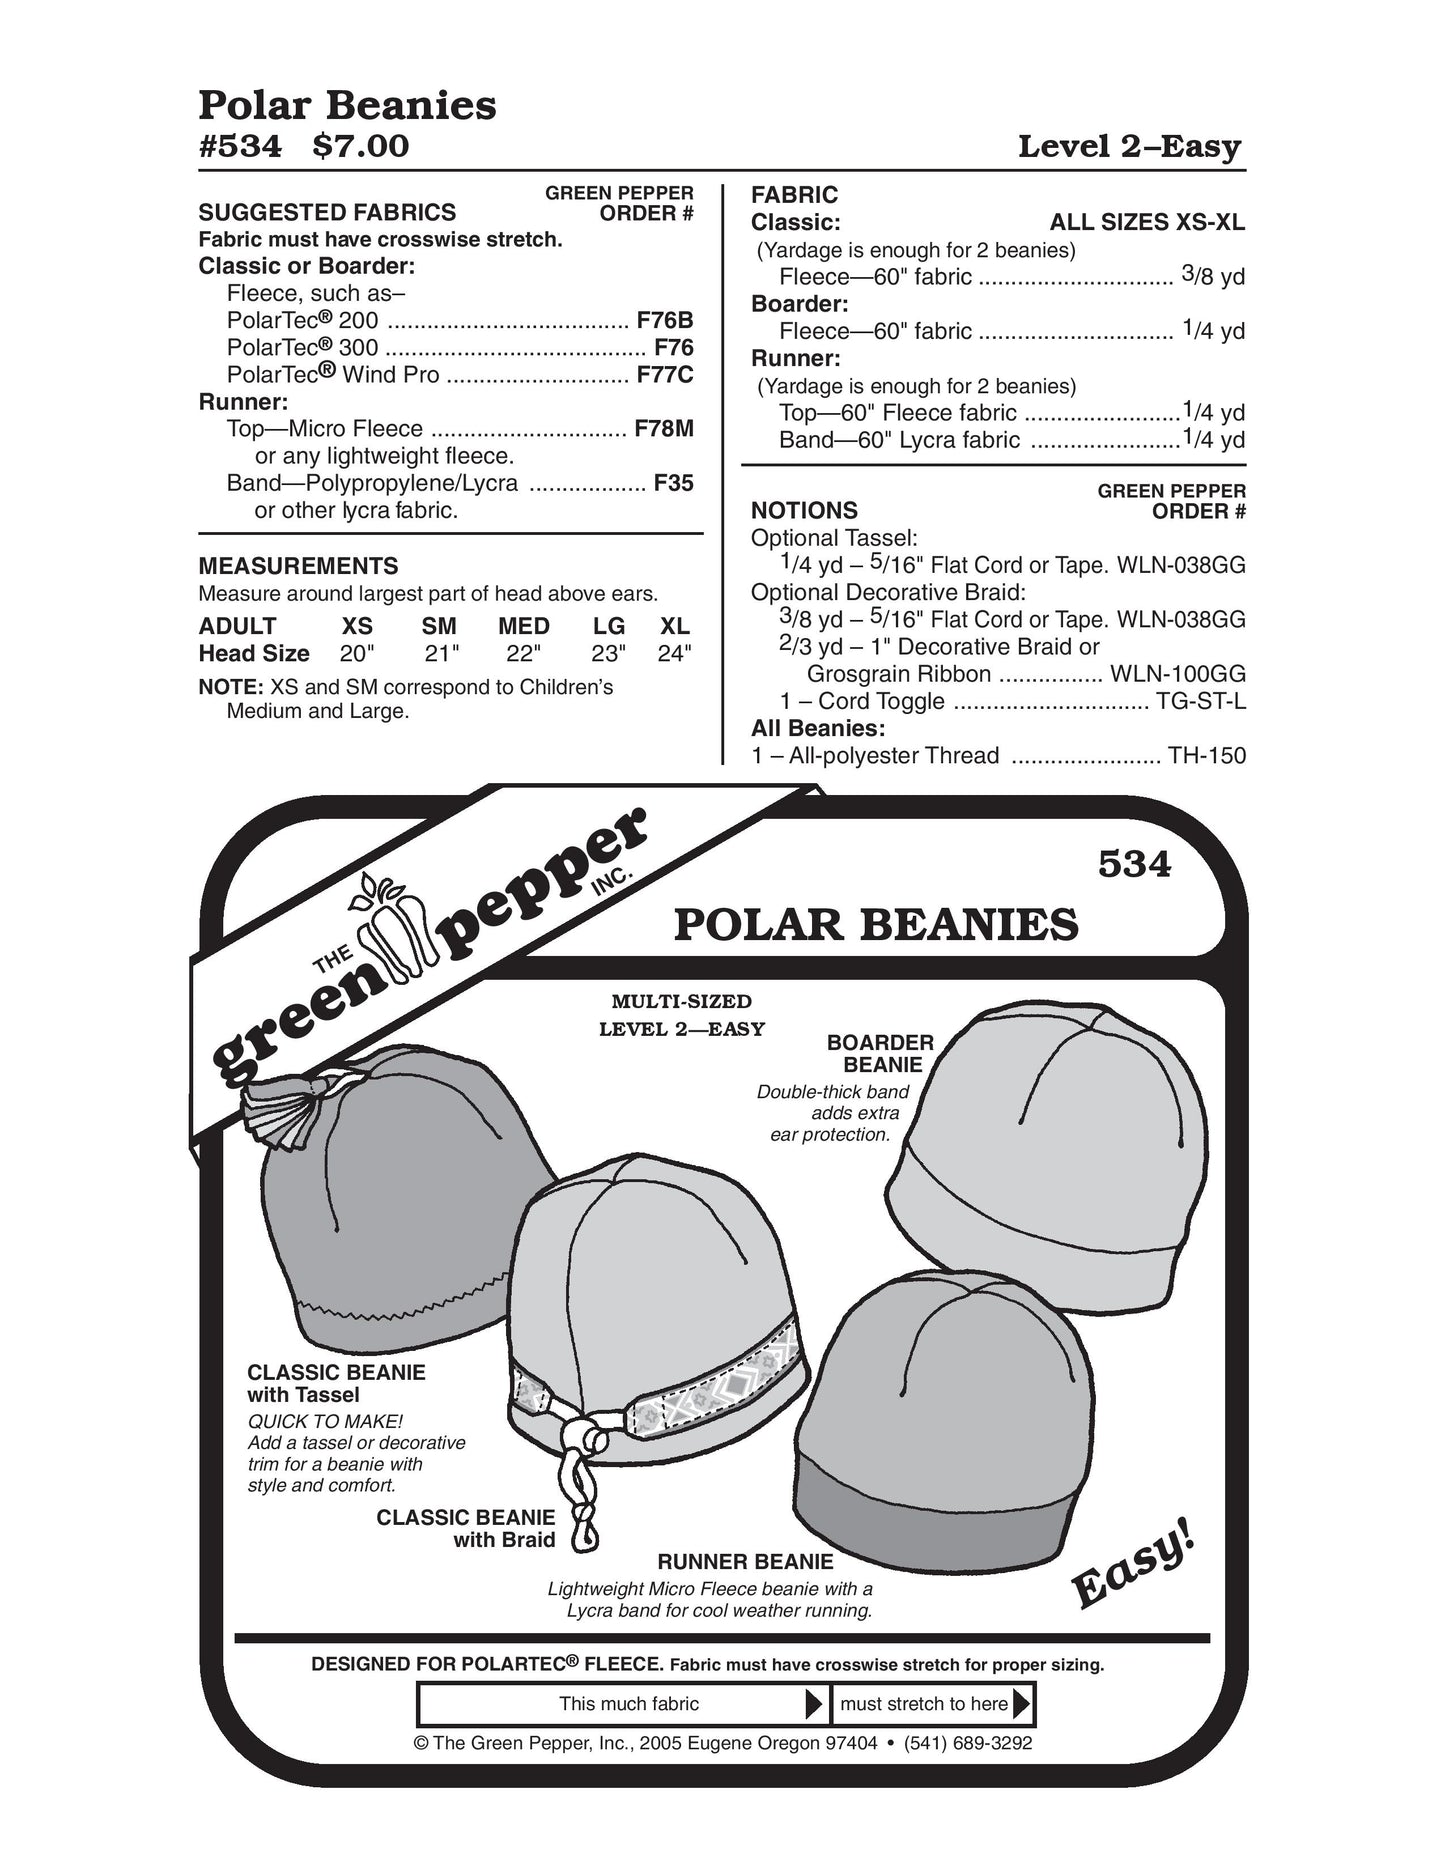 Polar Beanies Pattern (Sold per Each)